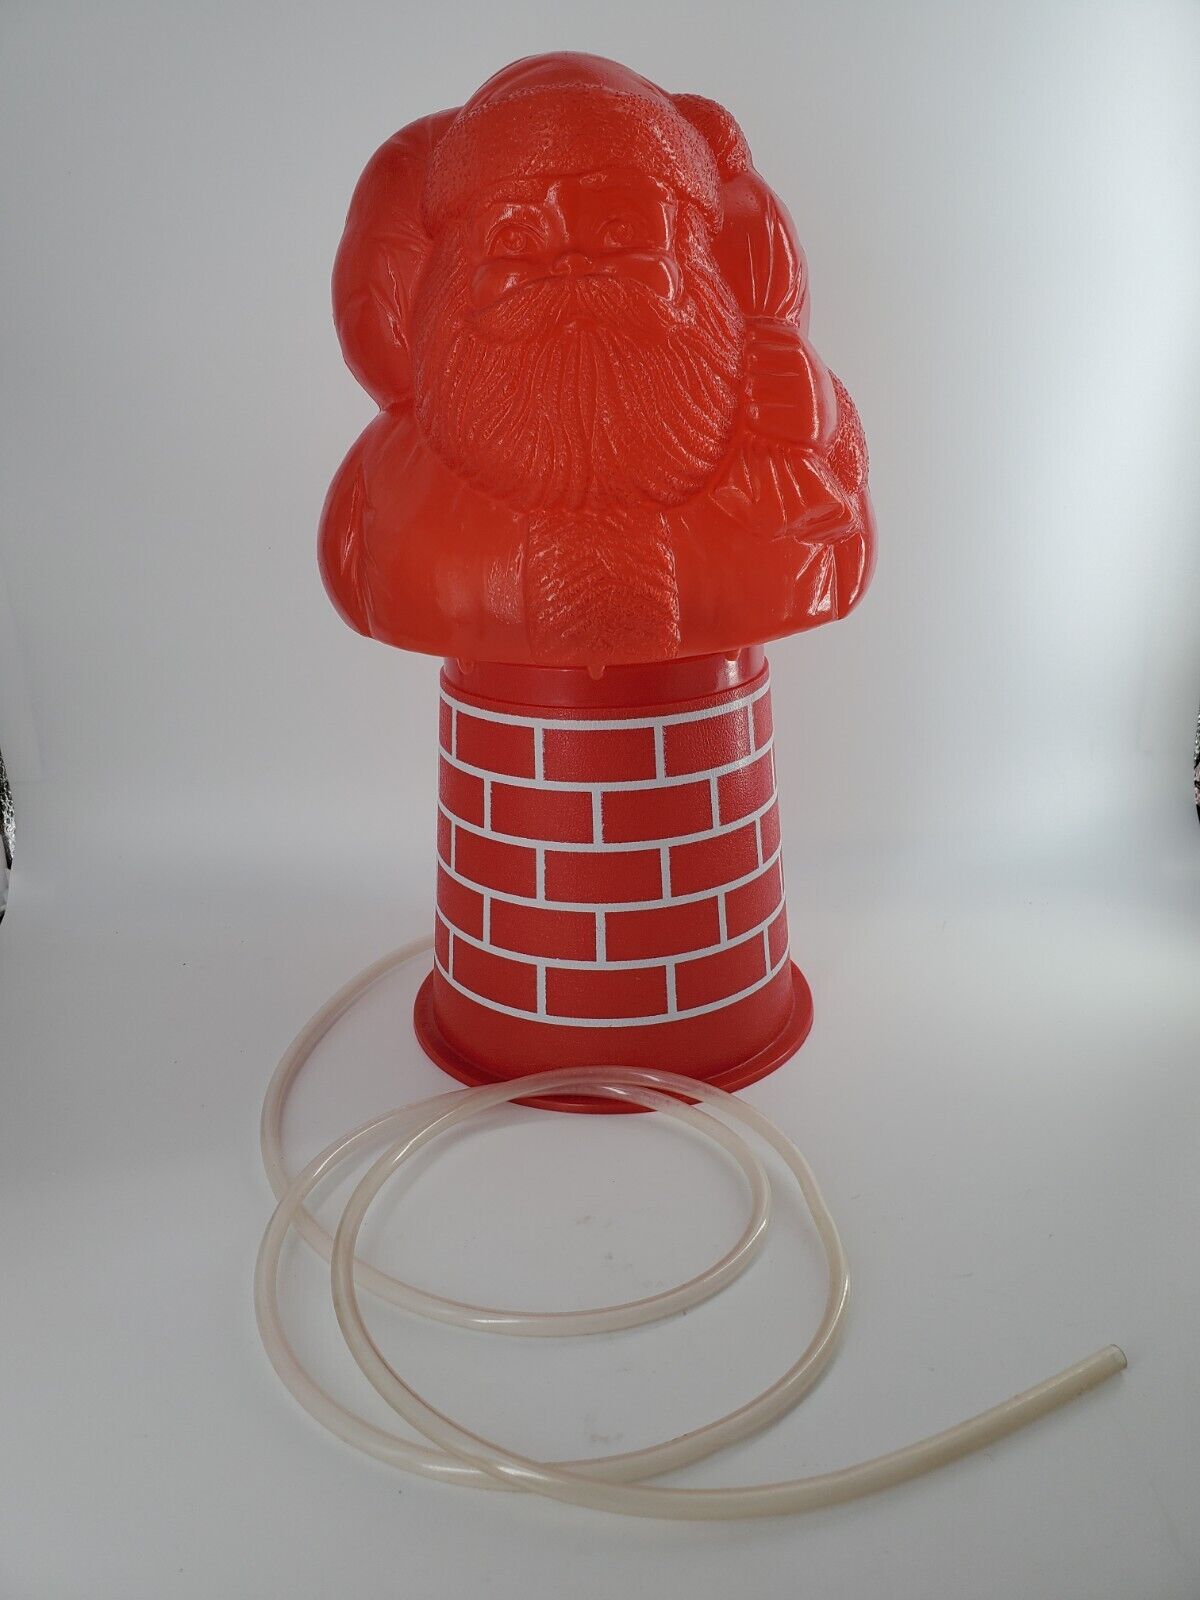 Blow Mold Santa Claus Christmas Tree Fountain Self-Waterer in original box